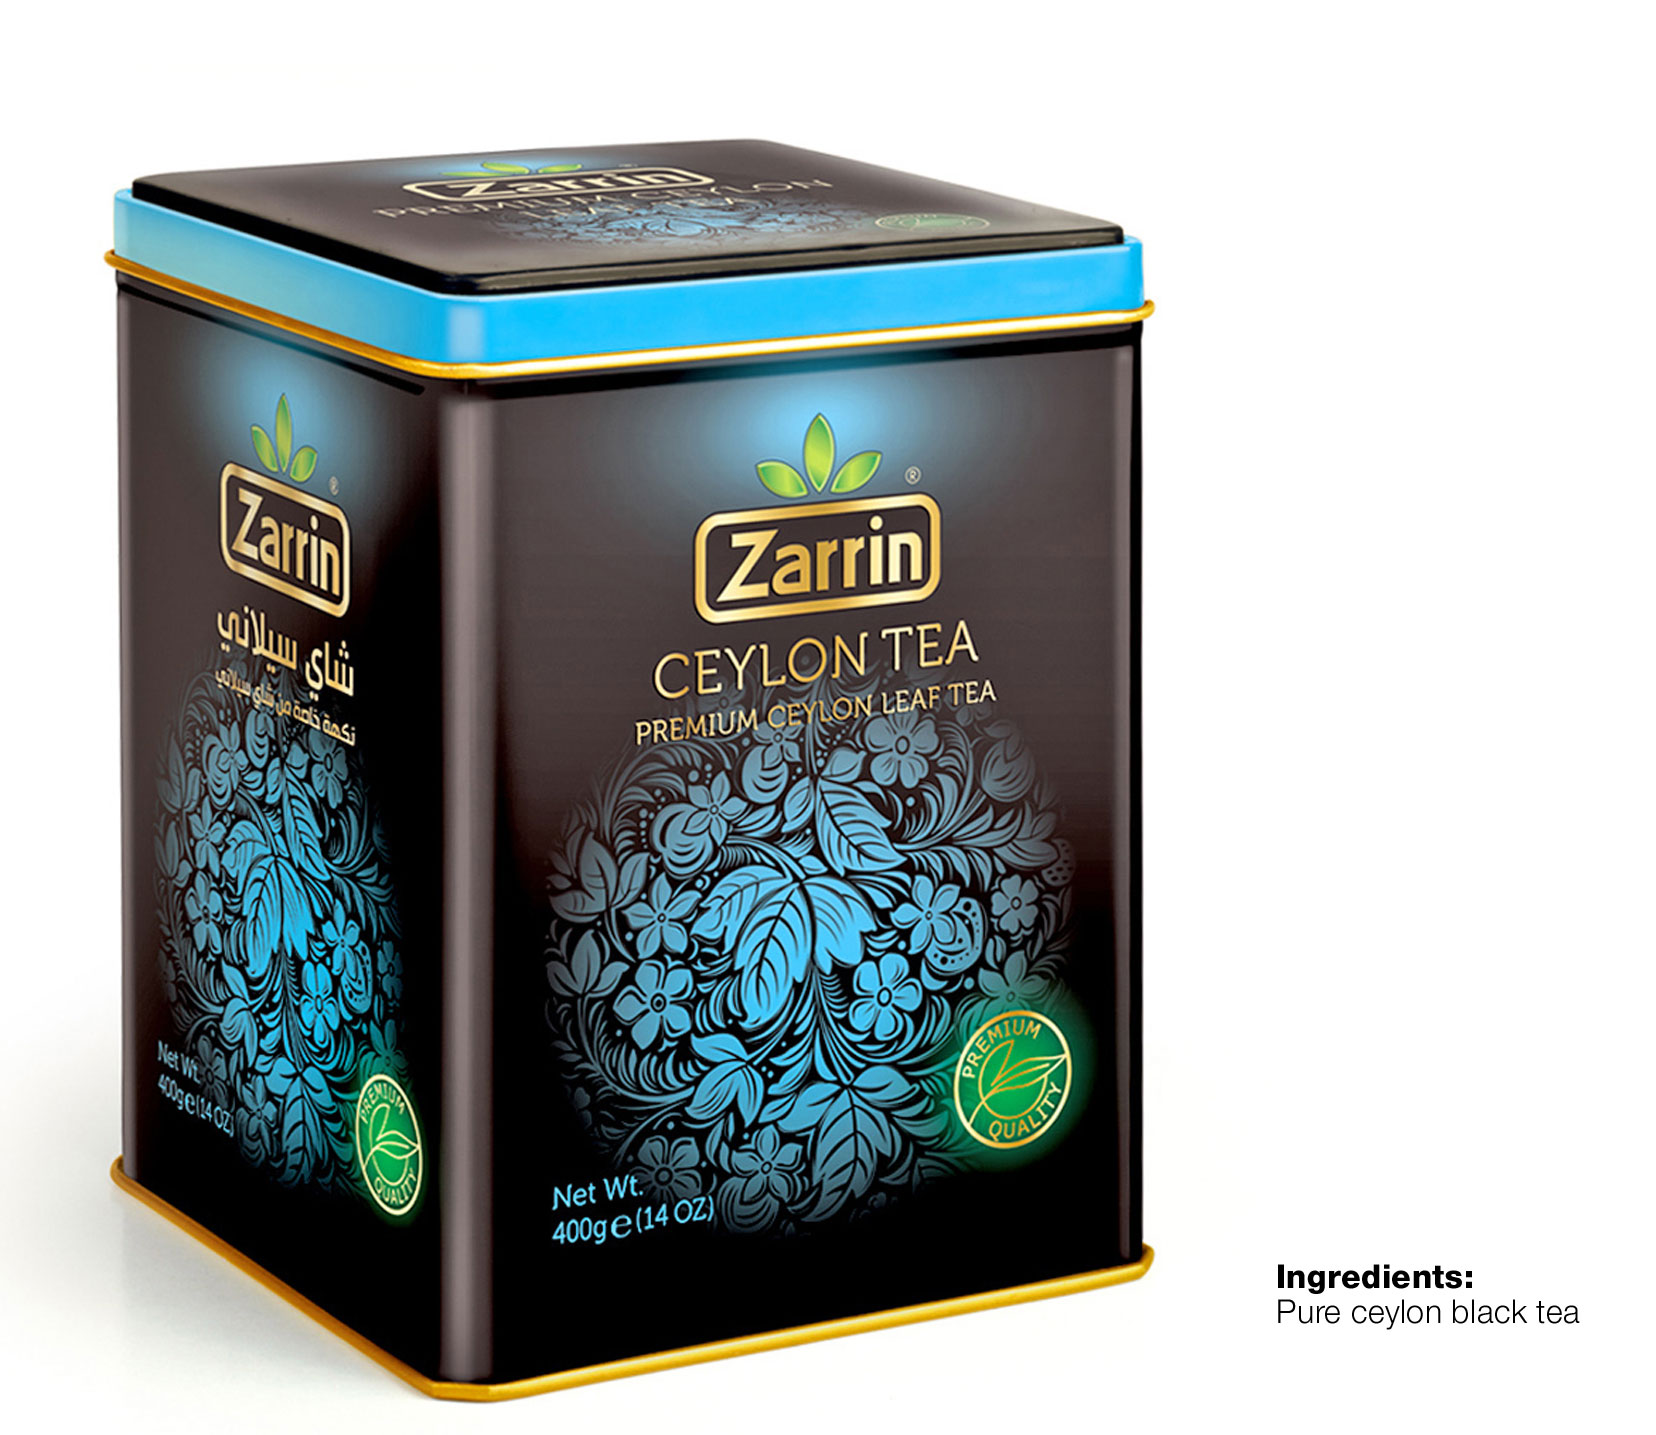 Zarrin premium ceylon leaf tea tin 14 oz.